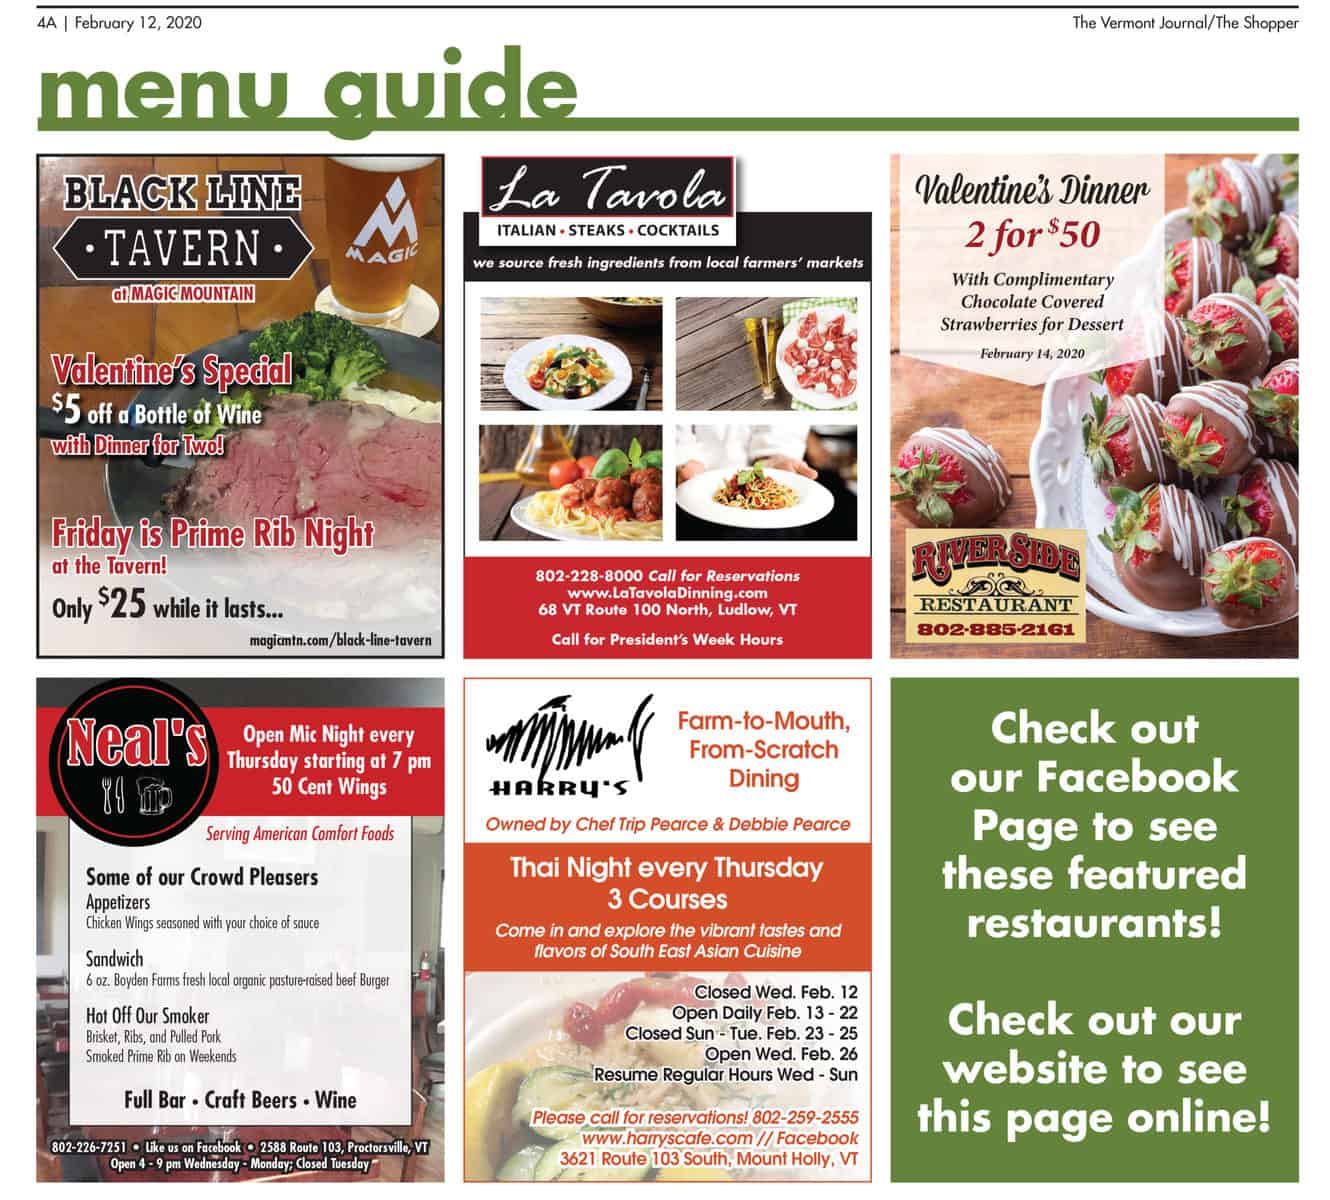 Menu Guide 02-12-20 - The Vermont Journal & The Shopper